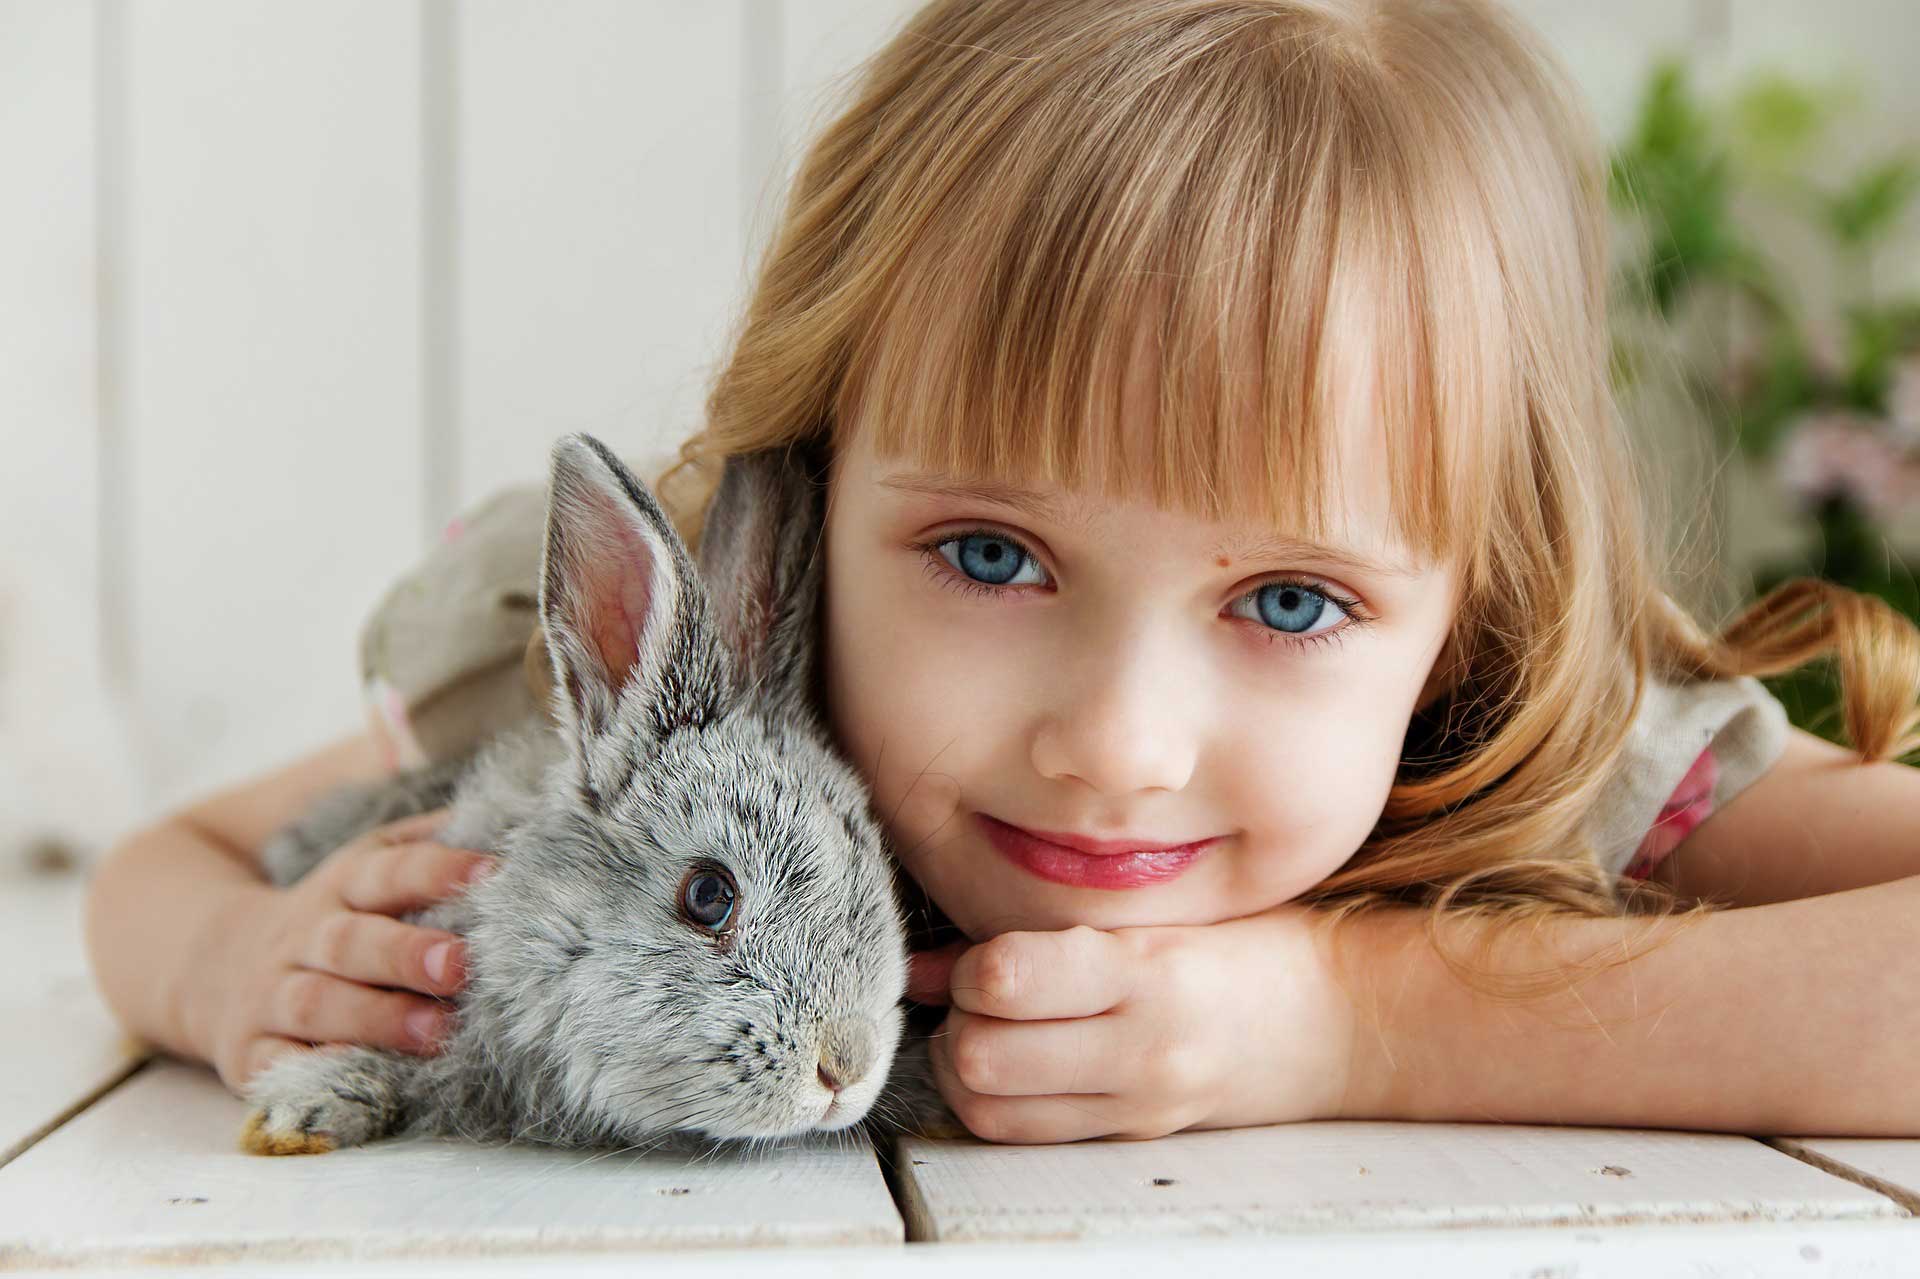 Young girl hugging pet rabbit on deck